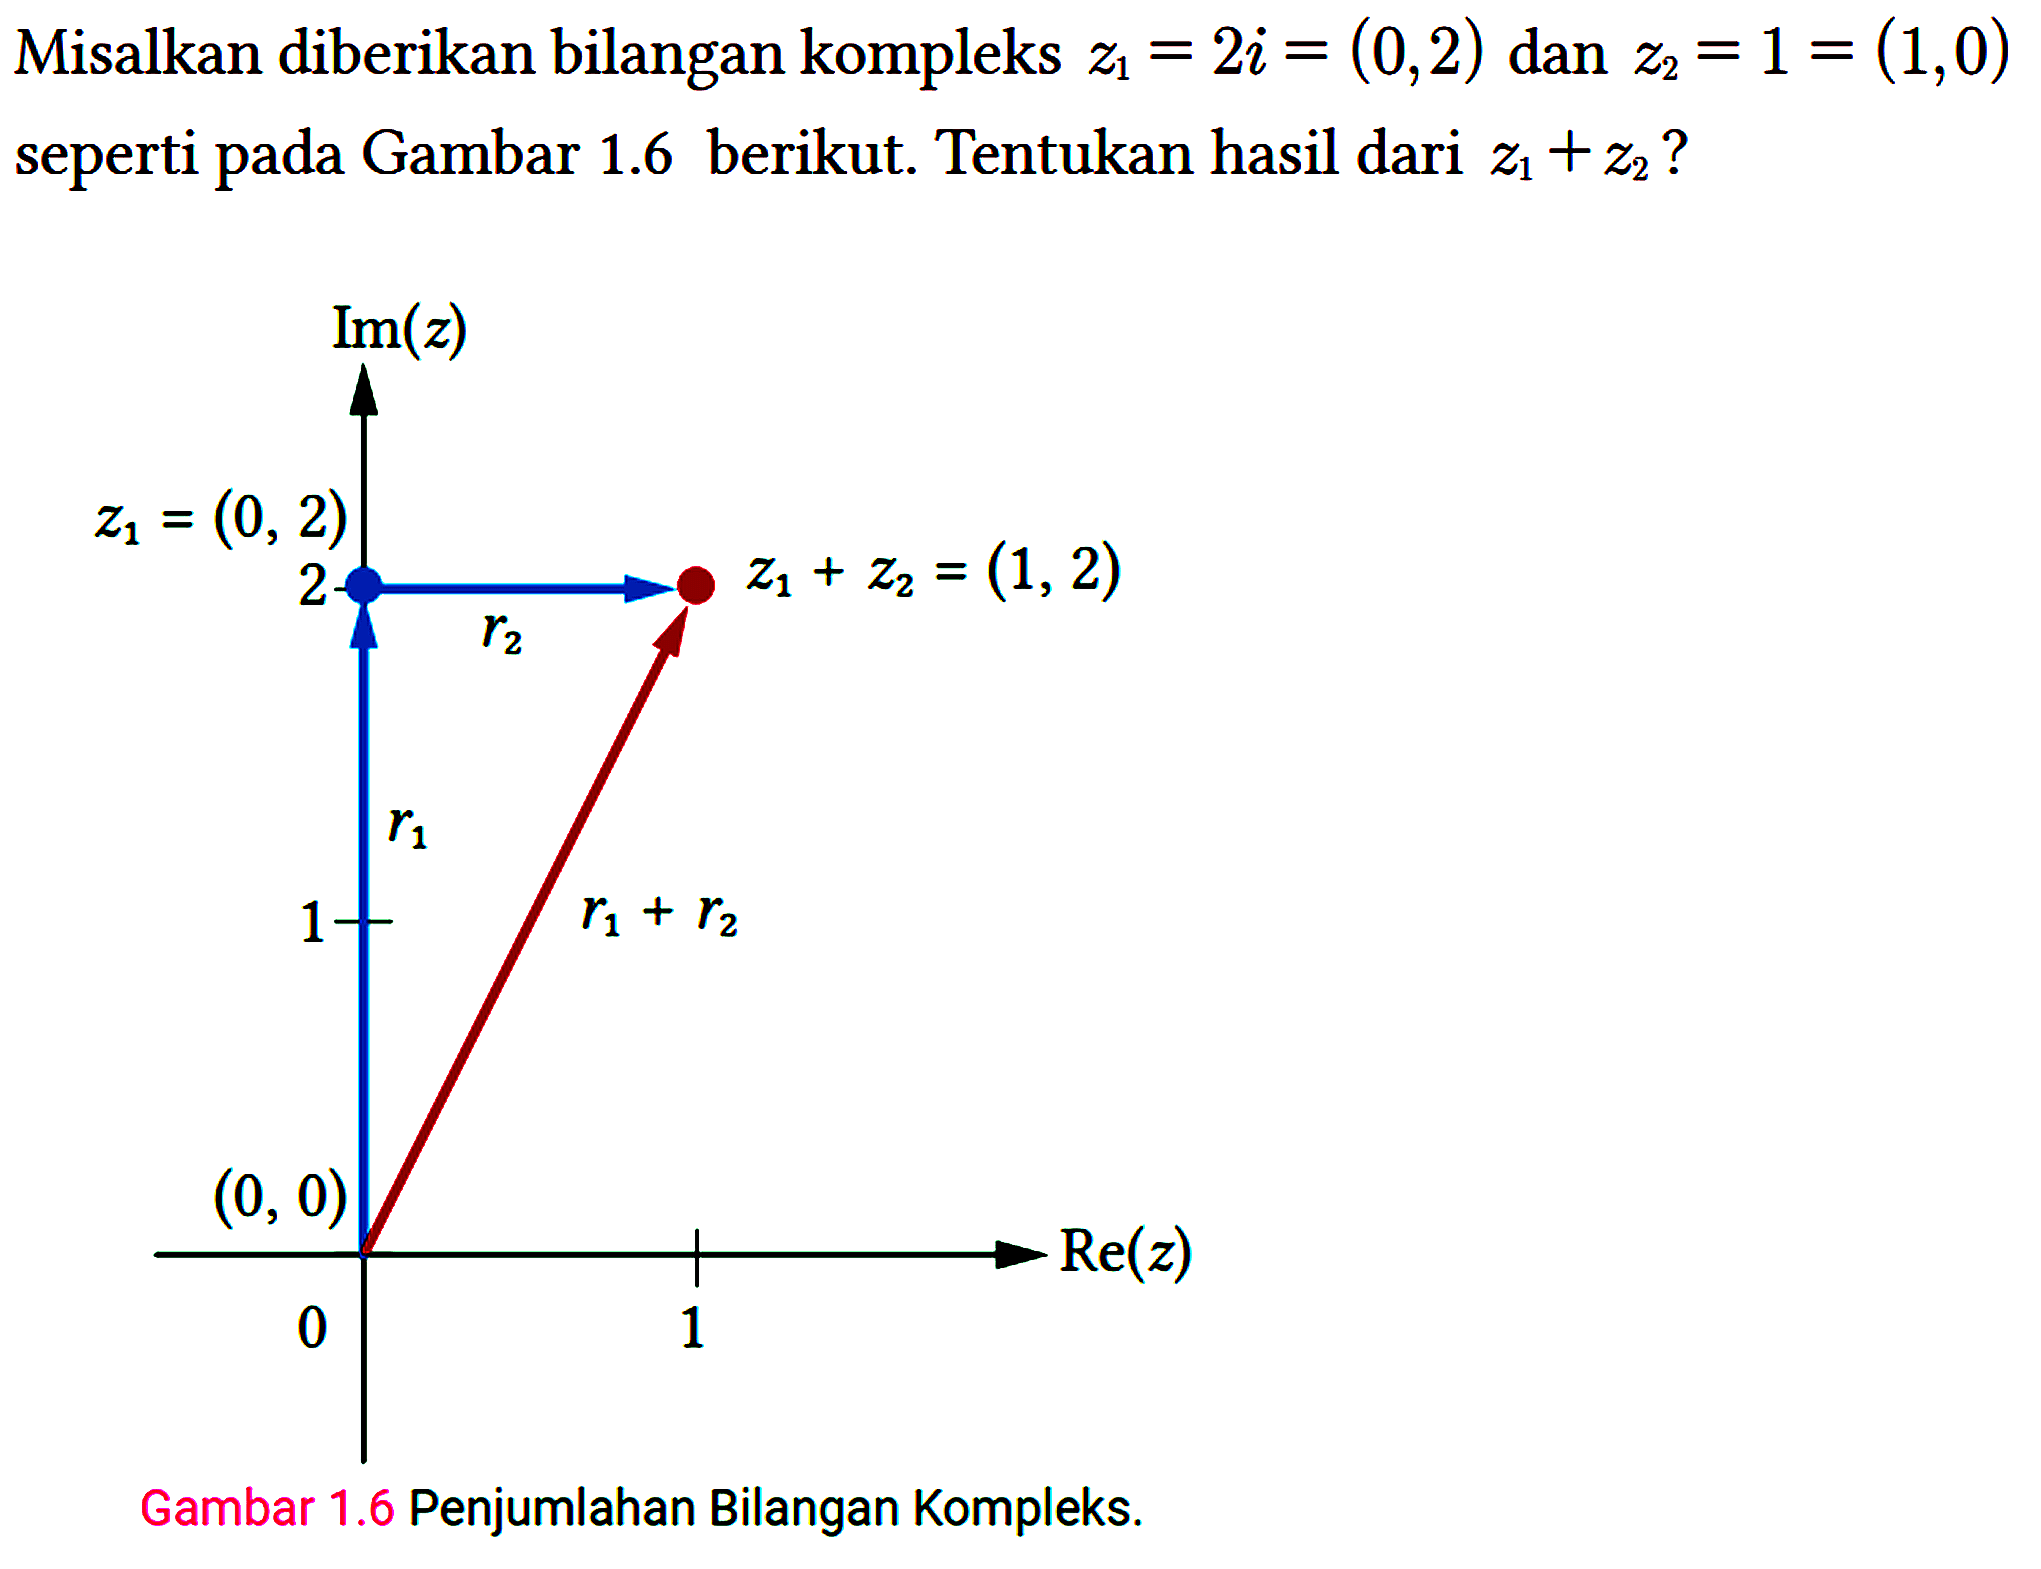 Misalkan diberikan bilangan kompleks z1 = 2i = (0,2) dan z2 = 1 = (1,0) seperti pada Gambar 1.6 berikut. Tentukan hasil dari z1 + z2?
Gambar 1.6 Penjumlahan Bilangan Kompleks.

lm(z)
z1 = (0,2) 2 r2 z1 + z2 = (1,2)
1 r1 r1 + r2
(0,0)
0 1 Re(z)